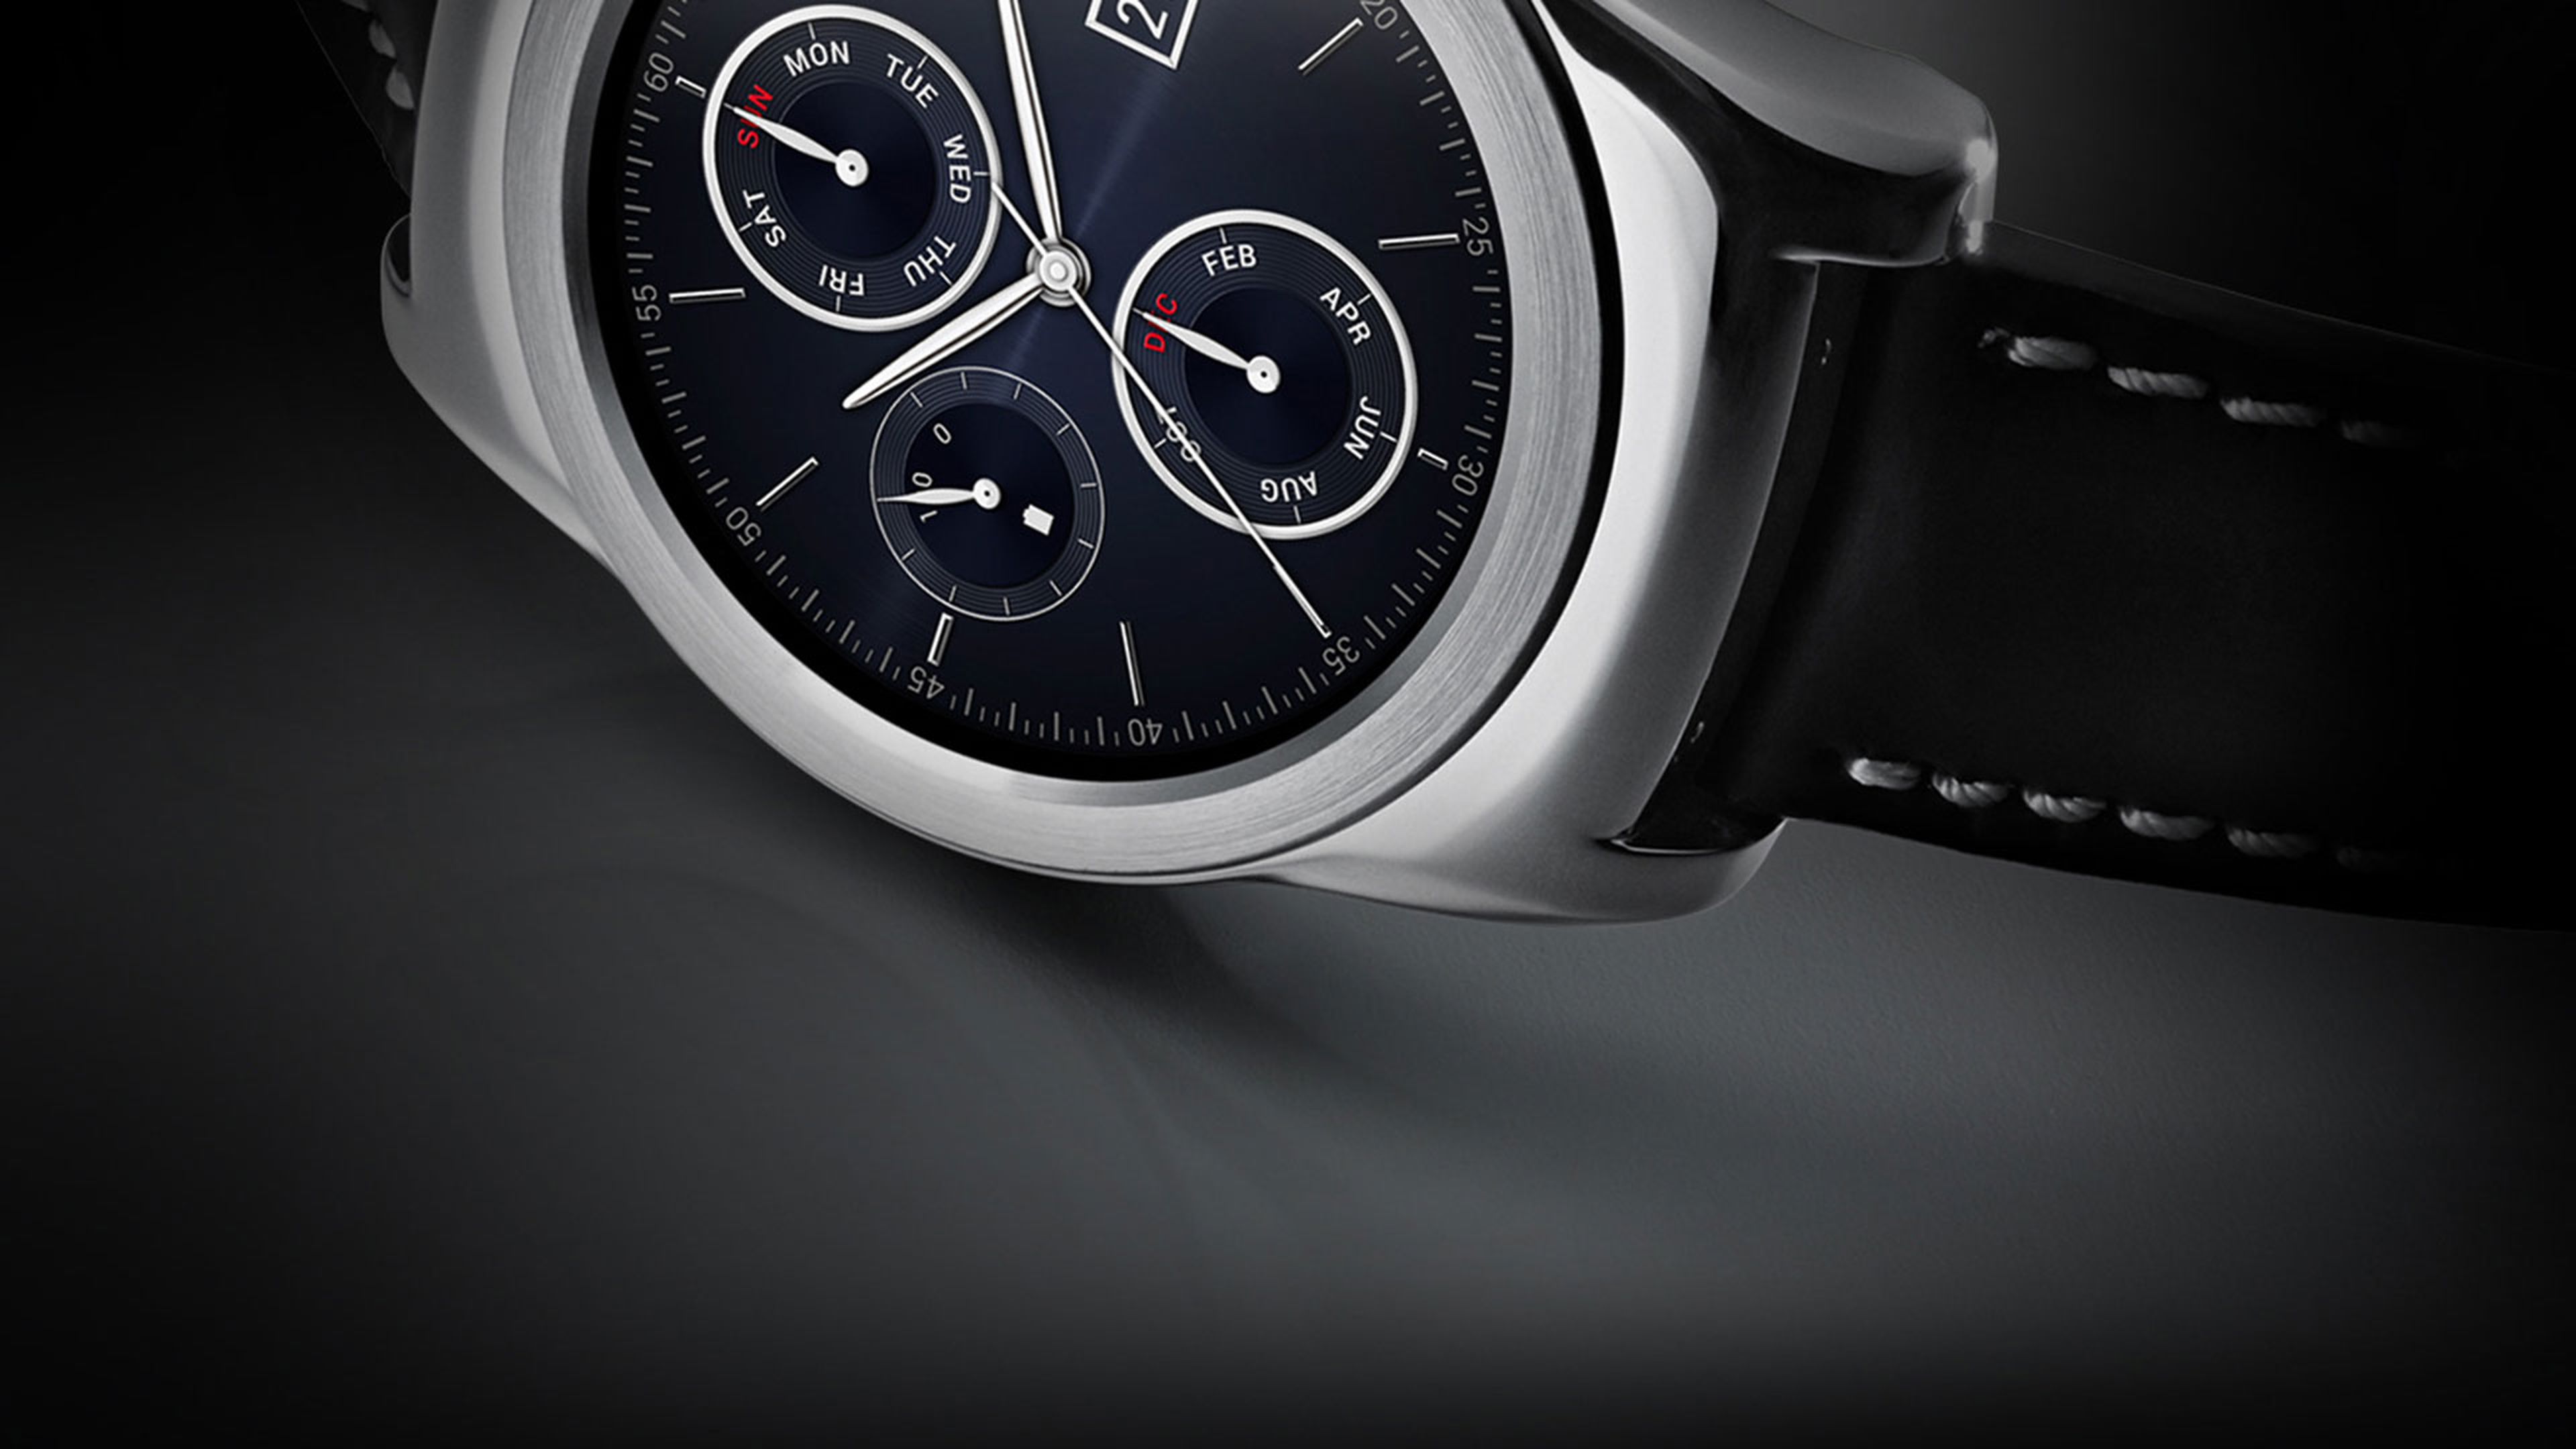 LG smartwatch